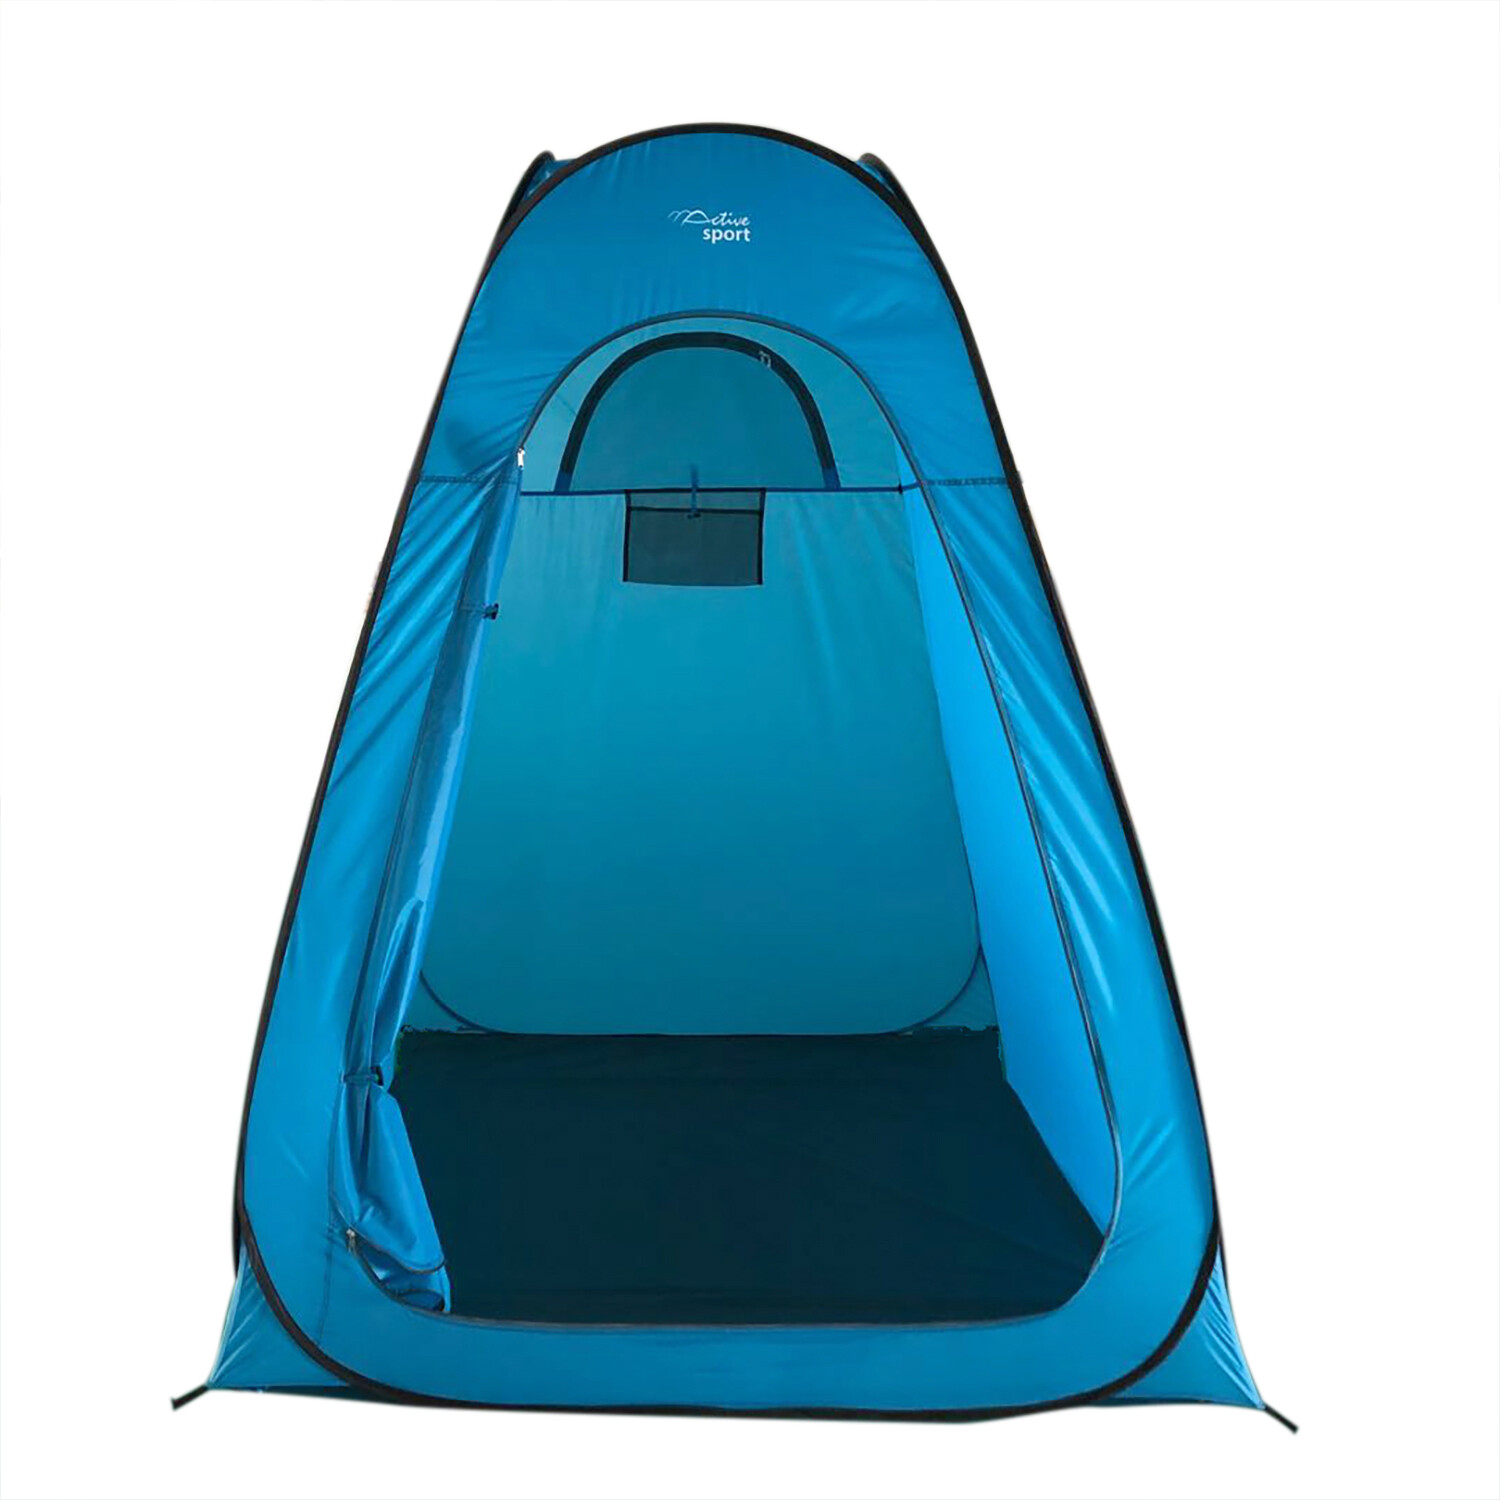 Active Sport Shower Tent Image 1